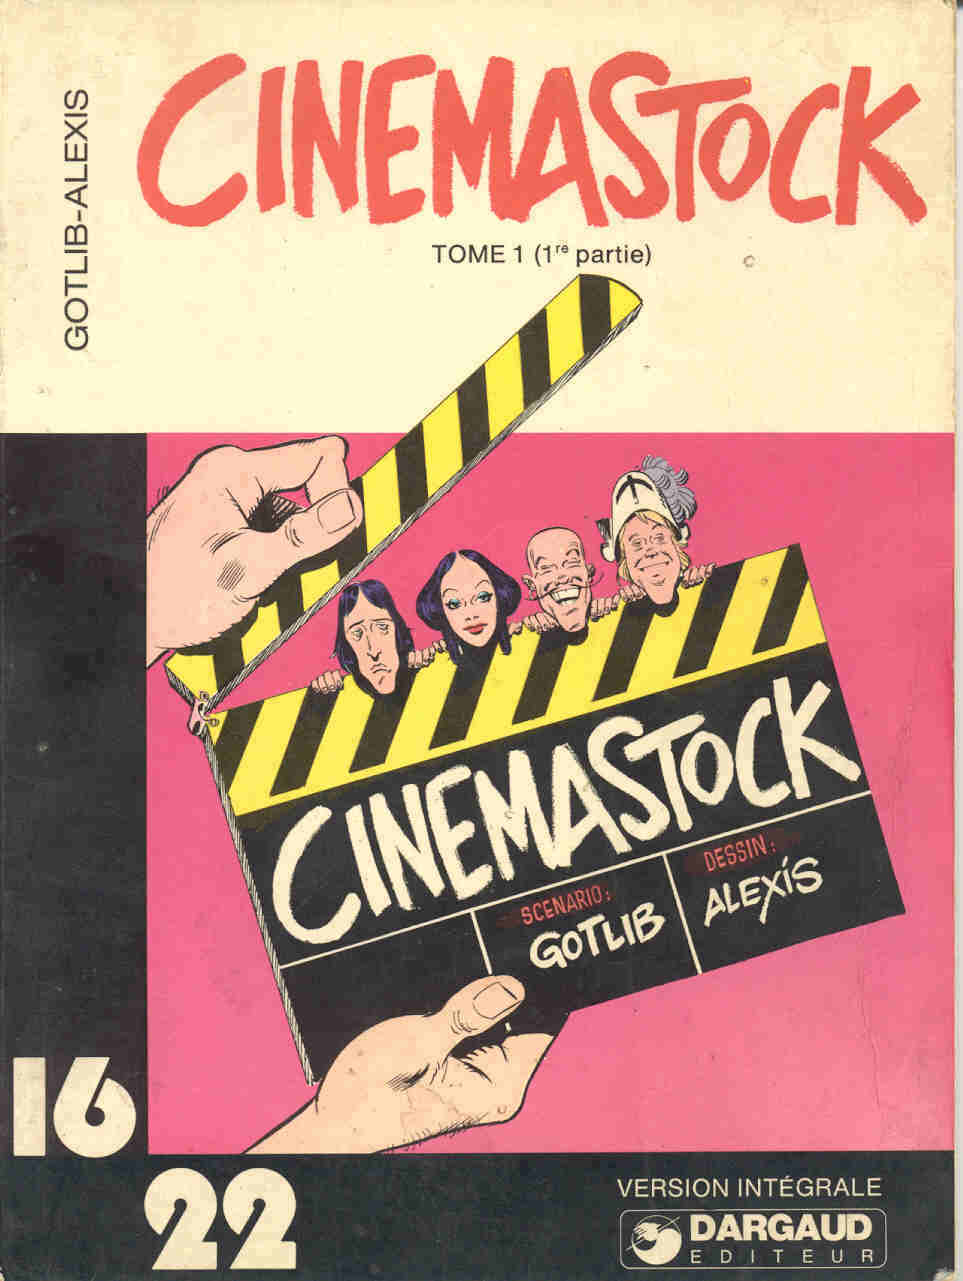 Cinemastock - Gotlib Et Alexis - Dargaud 16-22 - 1978 - Gotlib